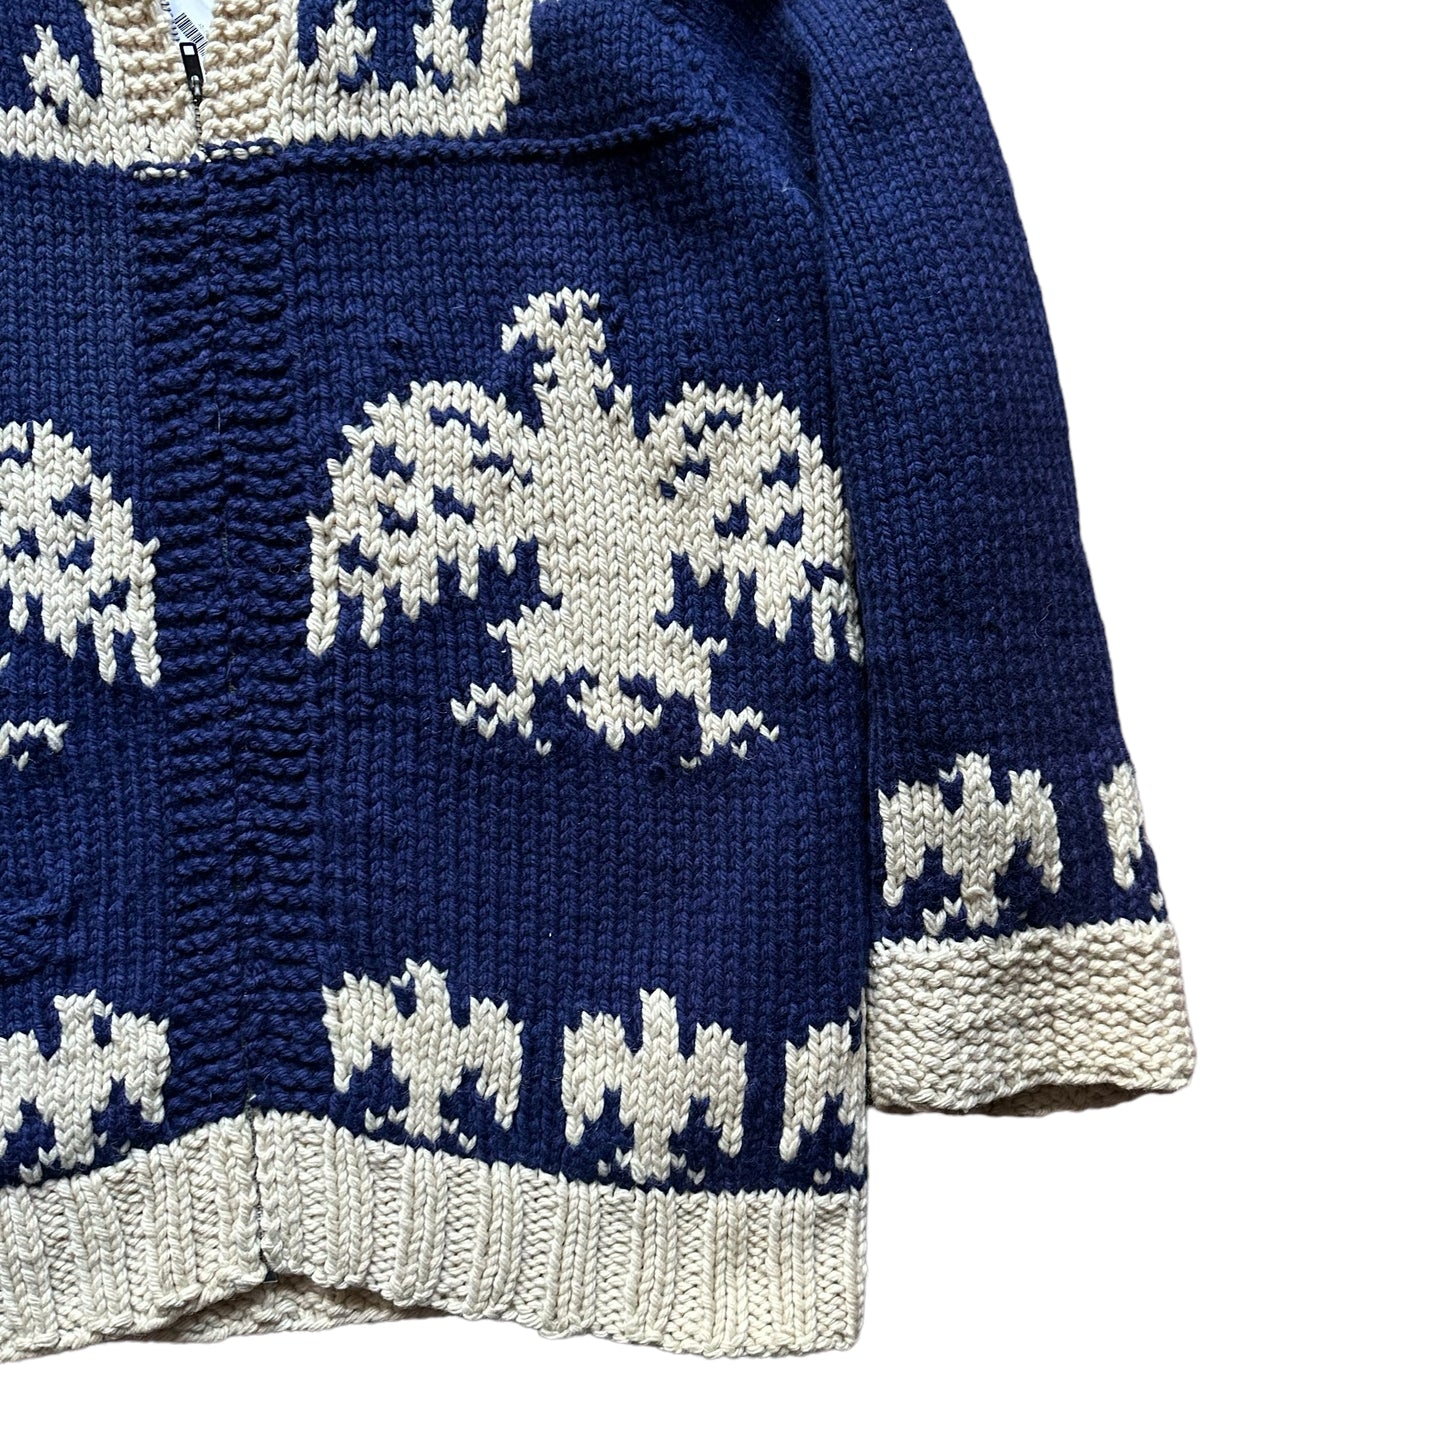 Vintage Thunderbird Cowichan Style Cardigan Sweater SZ L | Seattle Vintage Clothing | Barn Owl Vintage